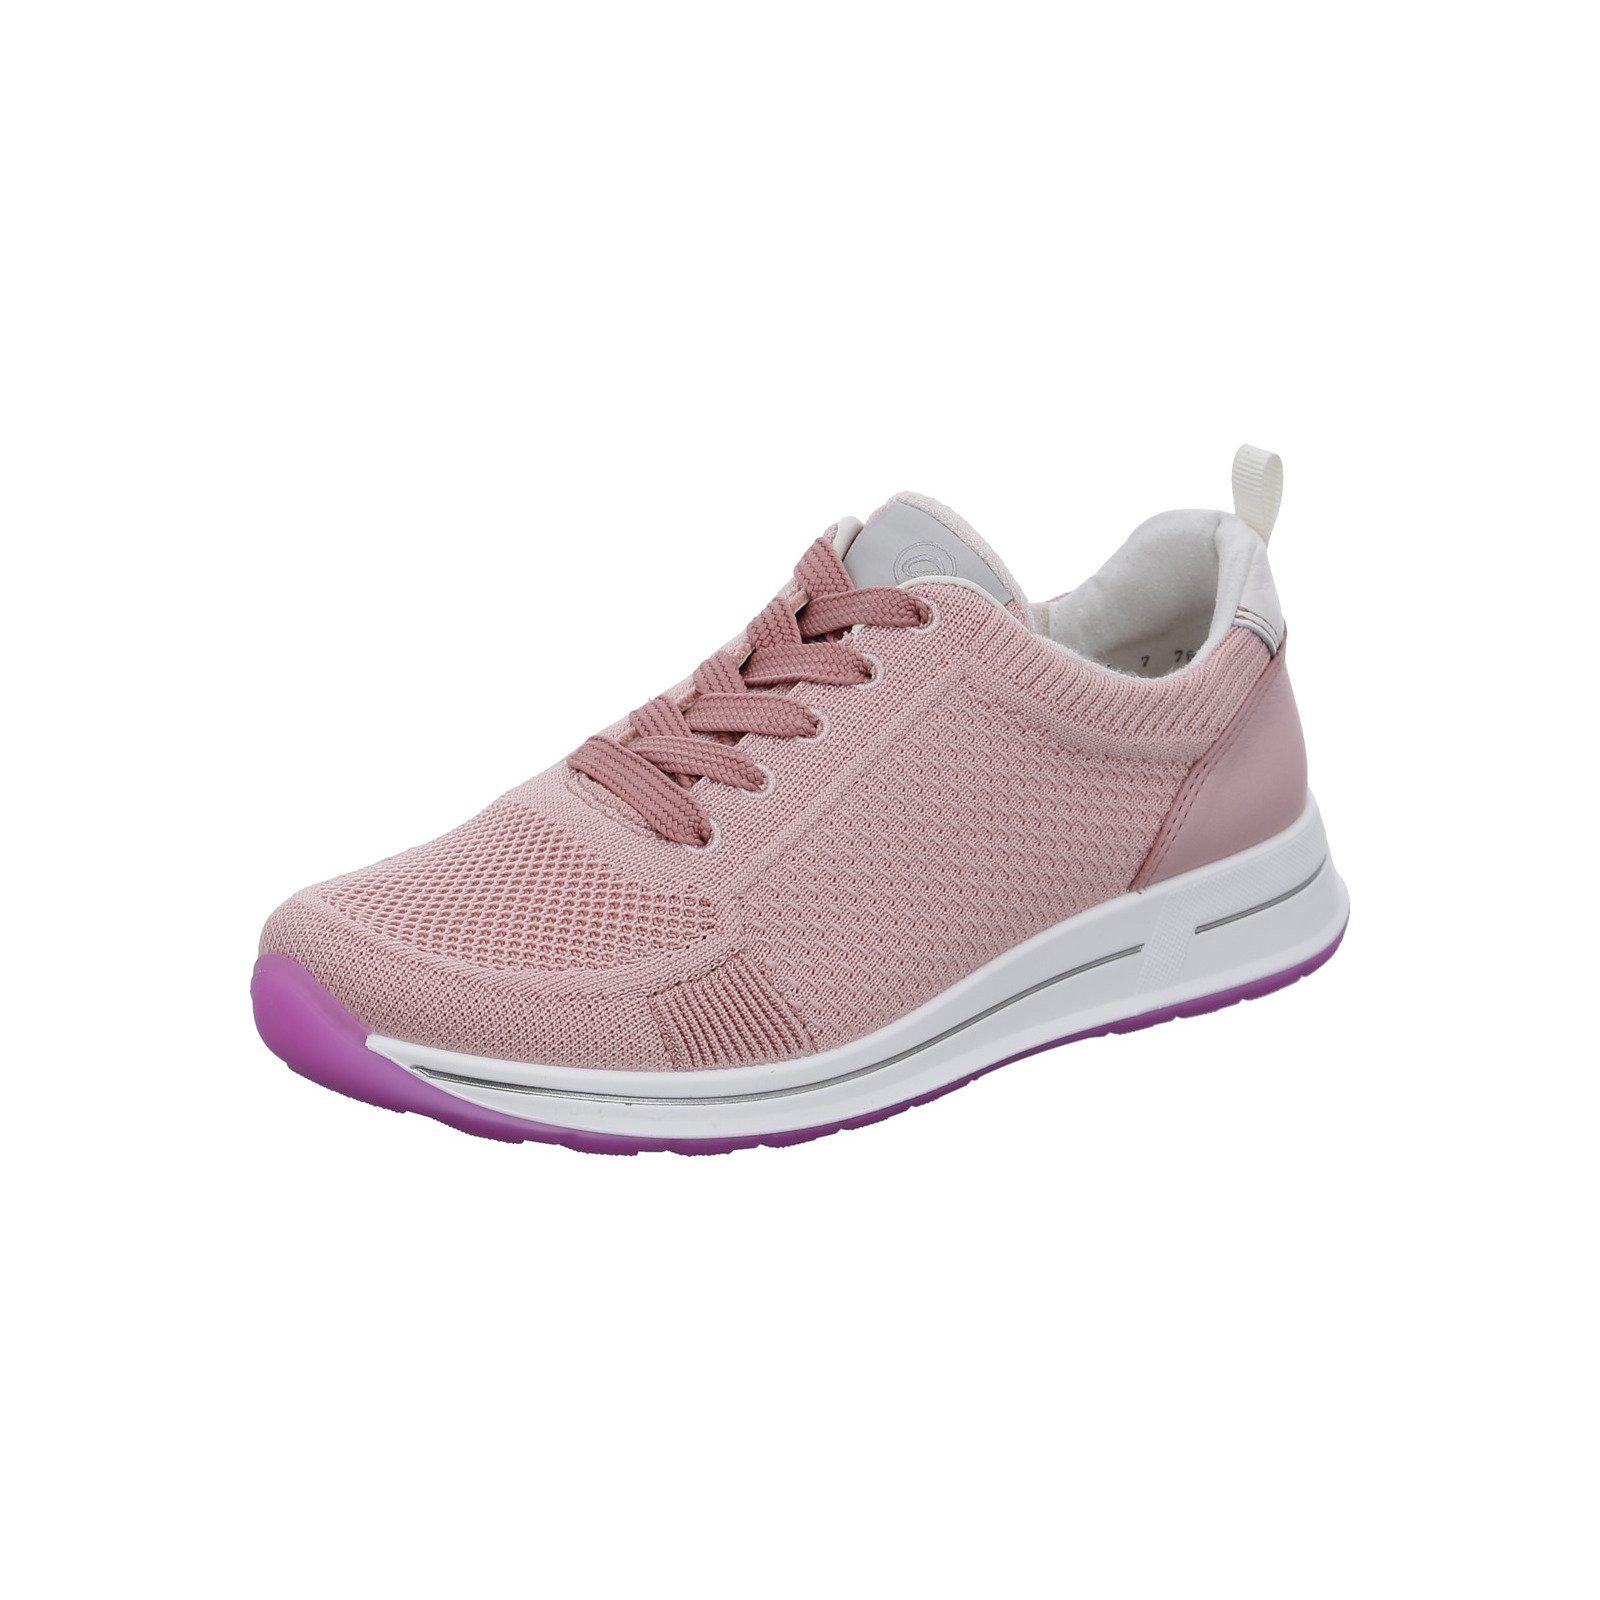 Ara Osaka - Damen Schuhe Schnürschuh Sneaker Materialmix rosa